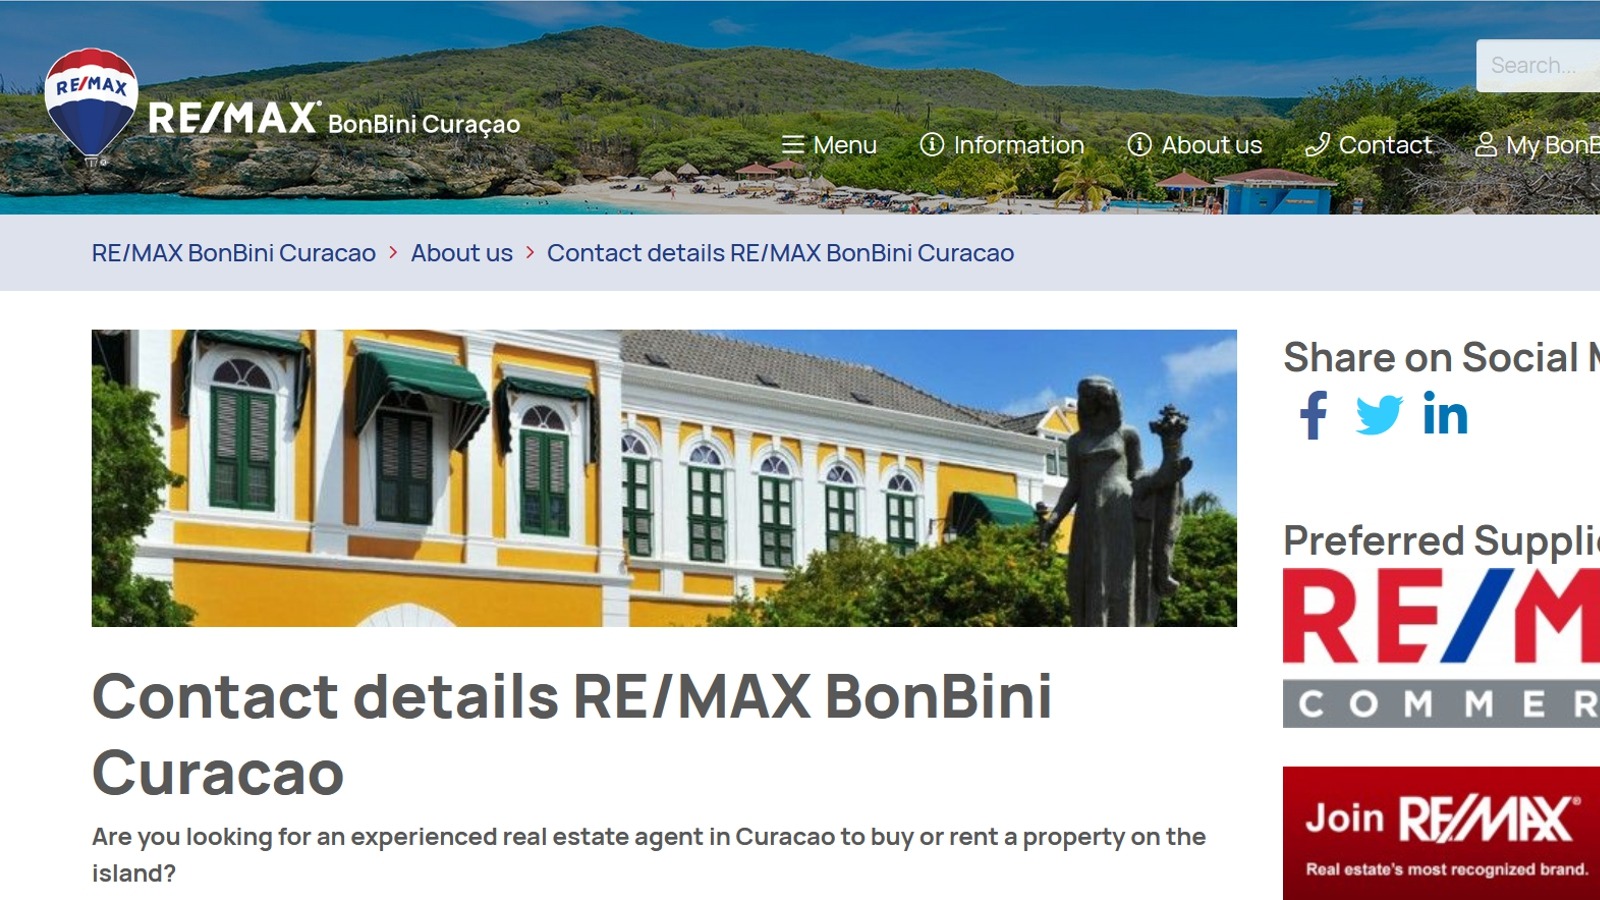 REMAX Bonbini Curacao